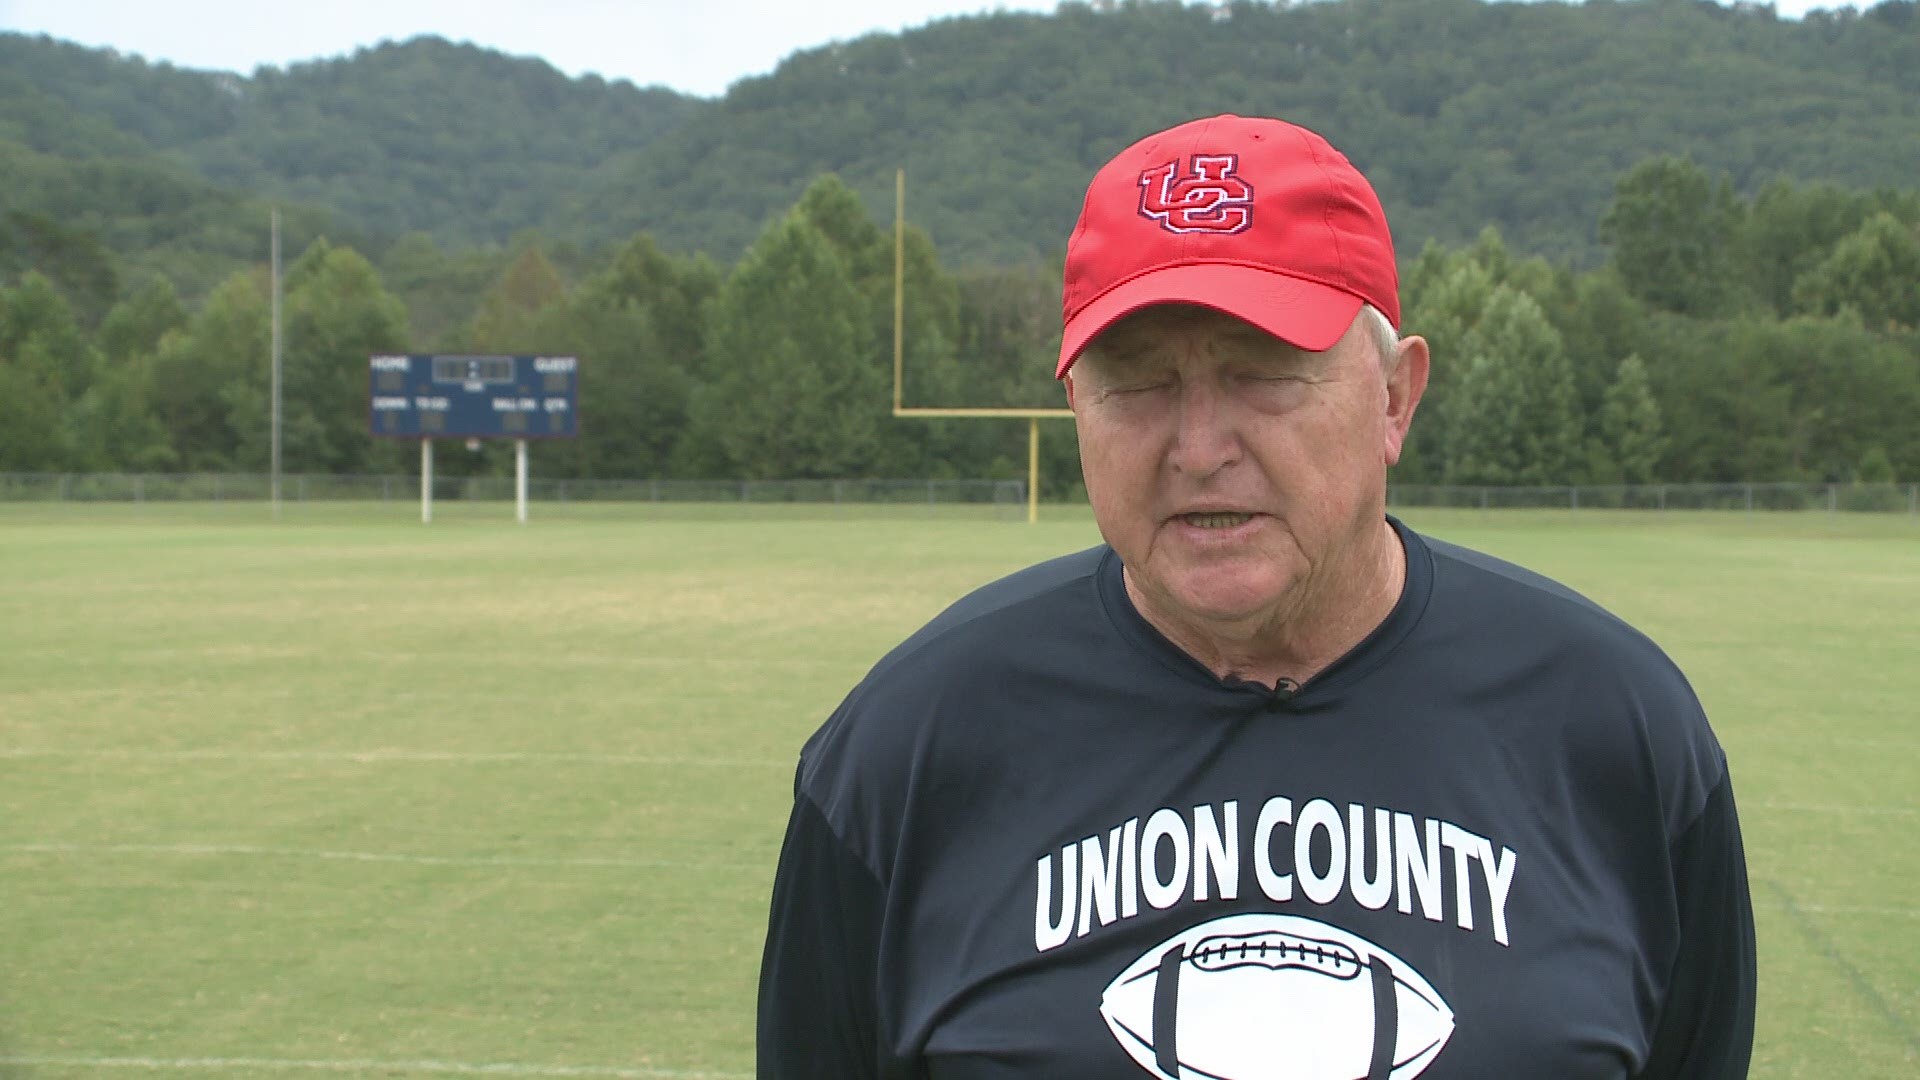 Coach Larry Kerr describes ending Union County's 28-game losing streak.